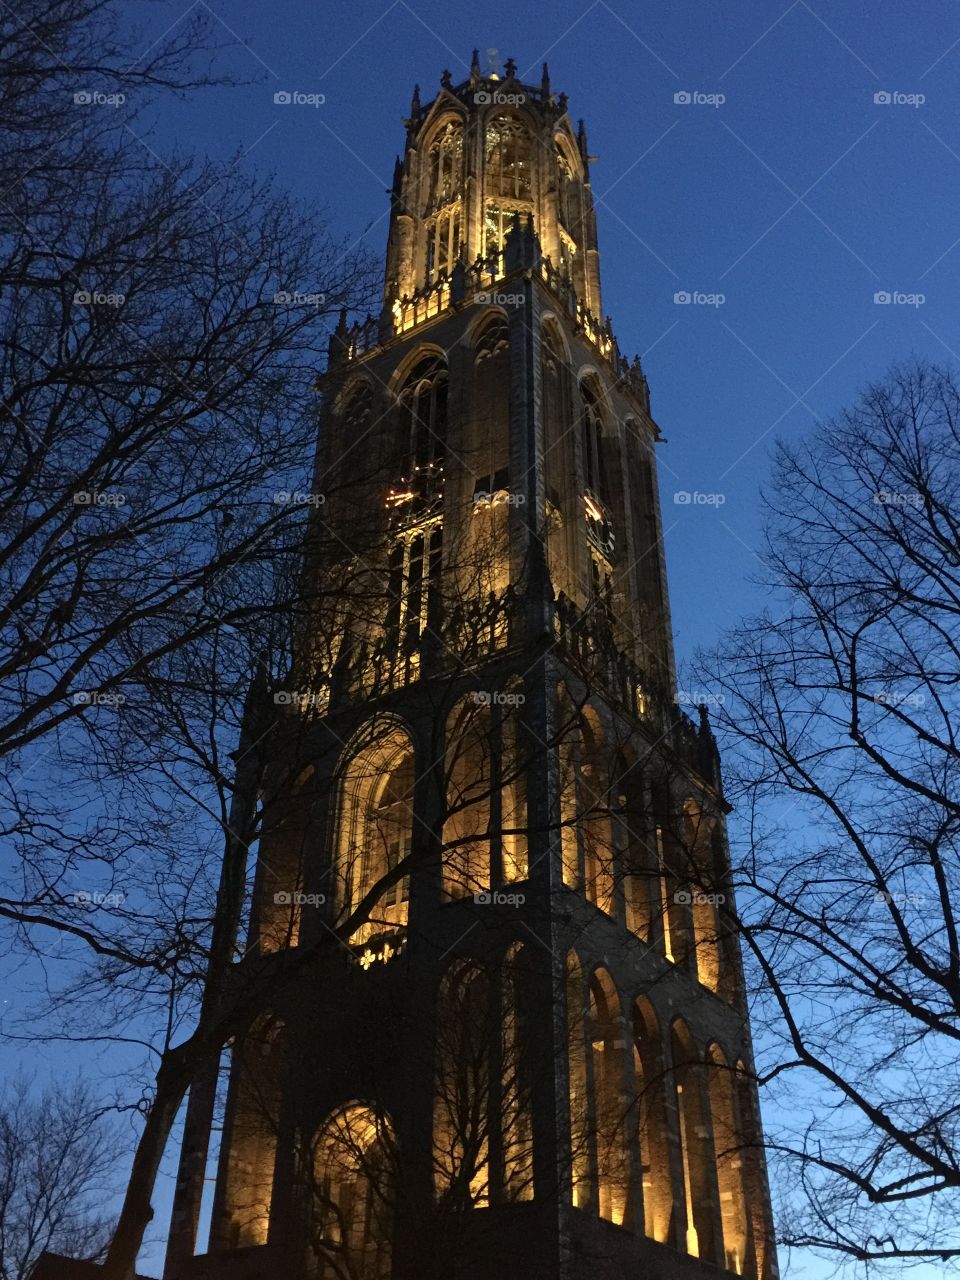 Dom tower, Utrecht, the Netherlands 